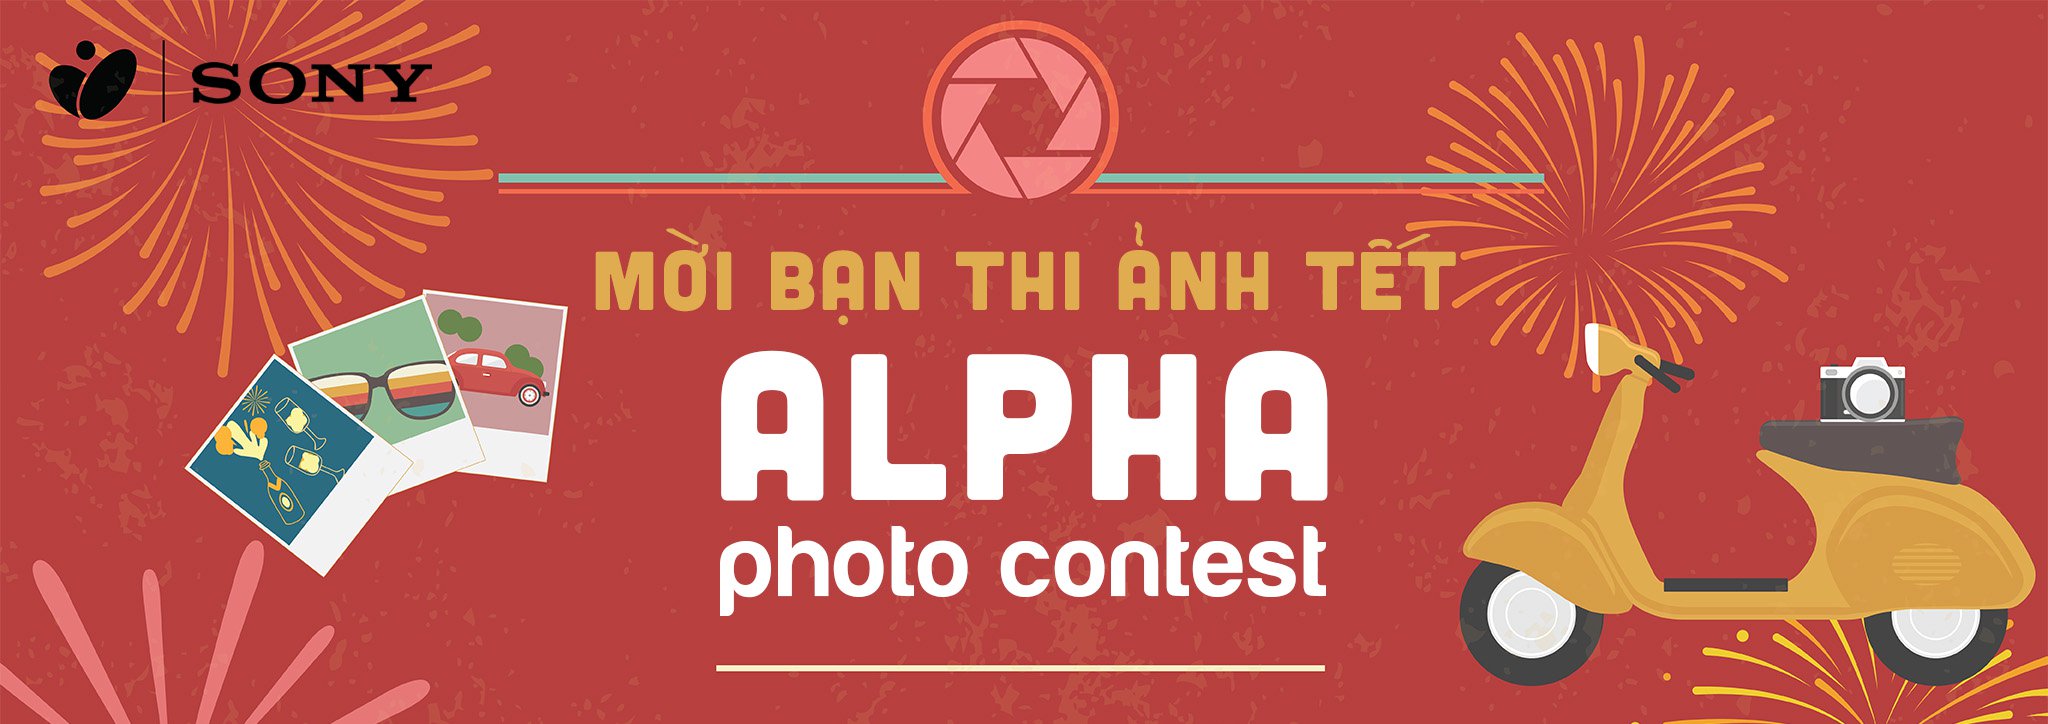 4229414_Alpha-Photo-Contest-Banner.jpg